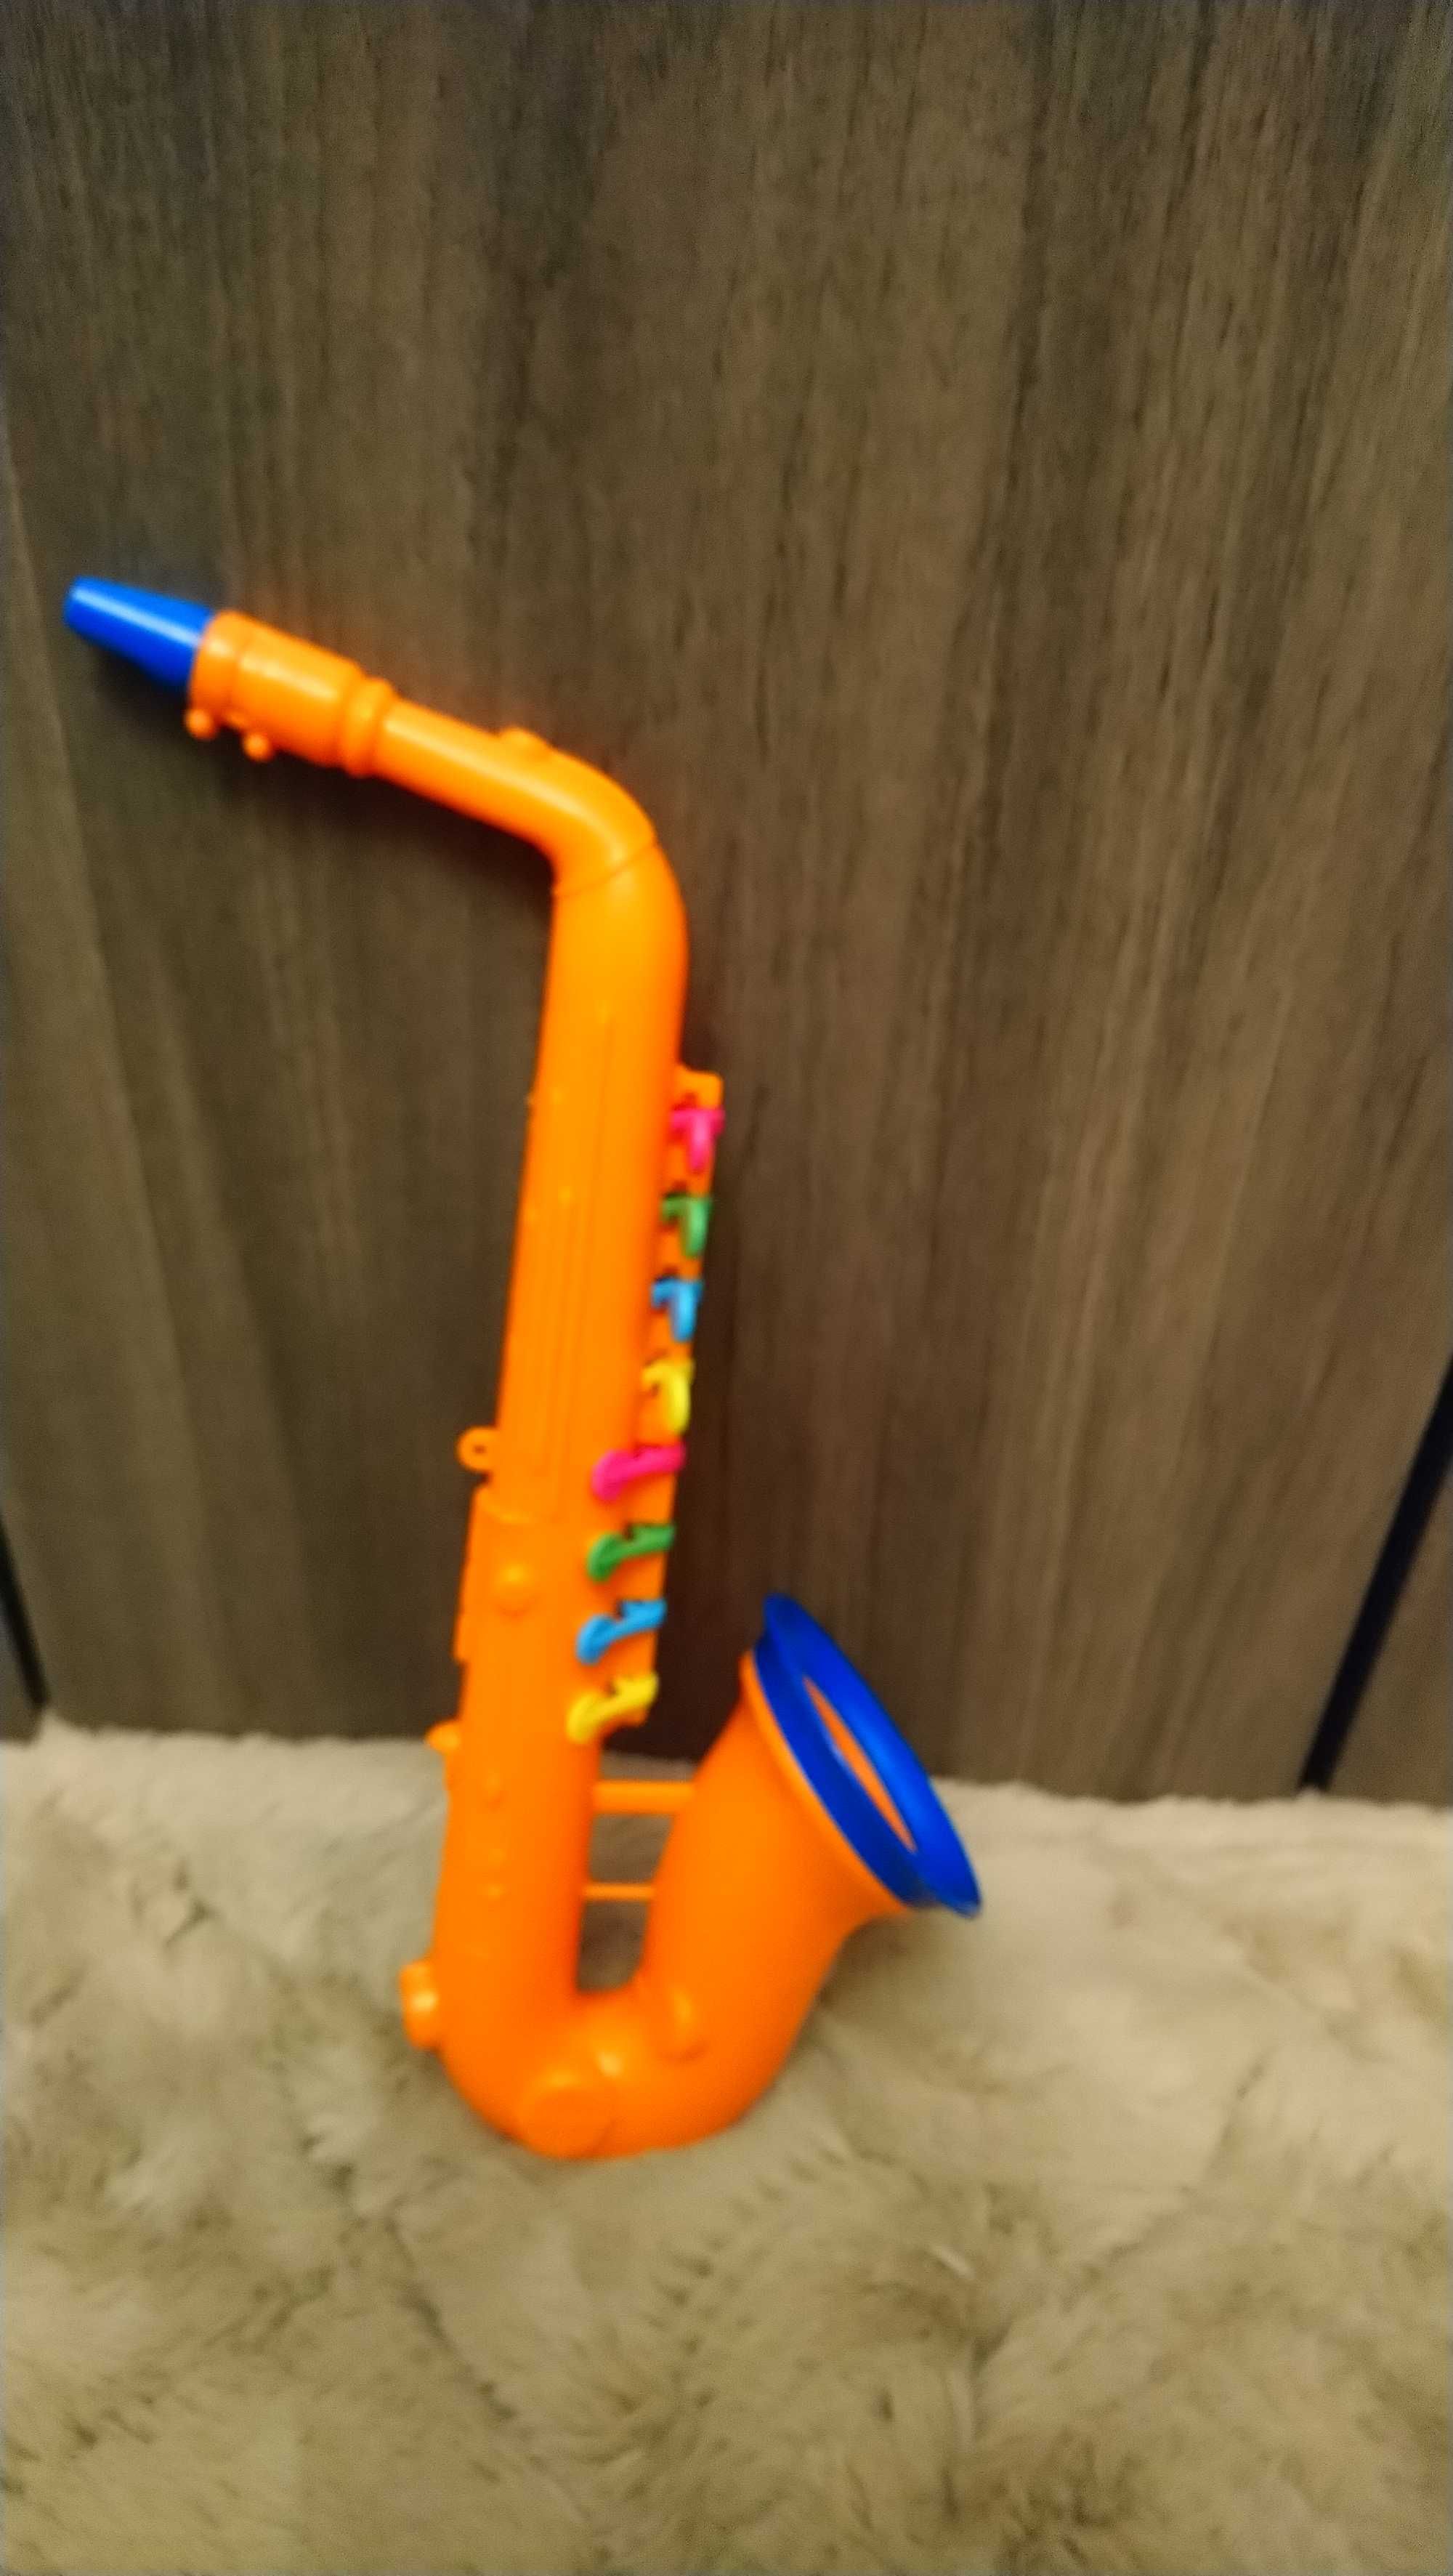 Zabawkowy instrument saksofon